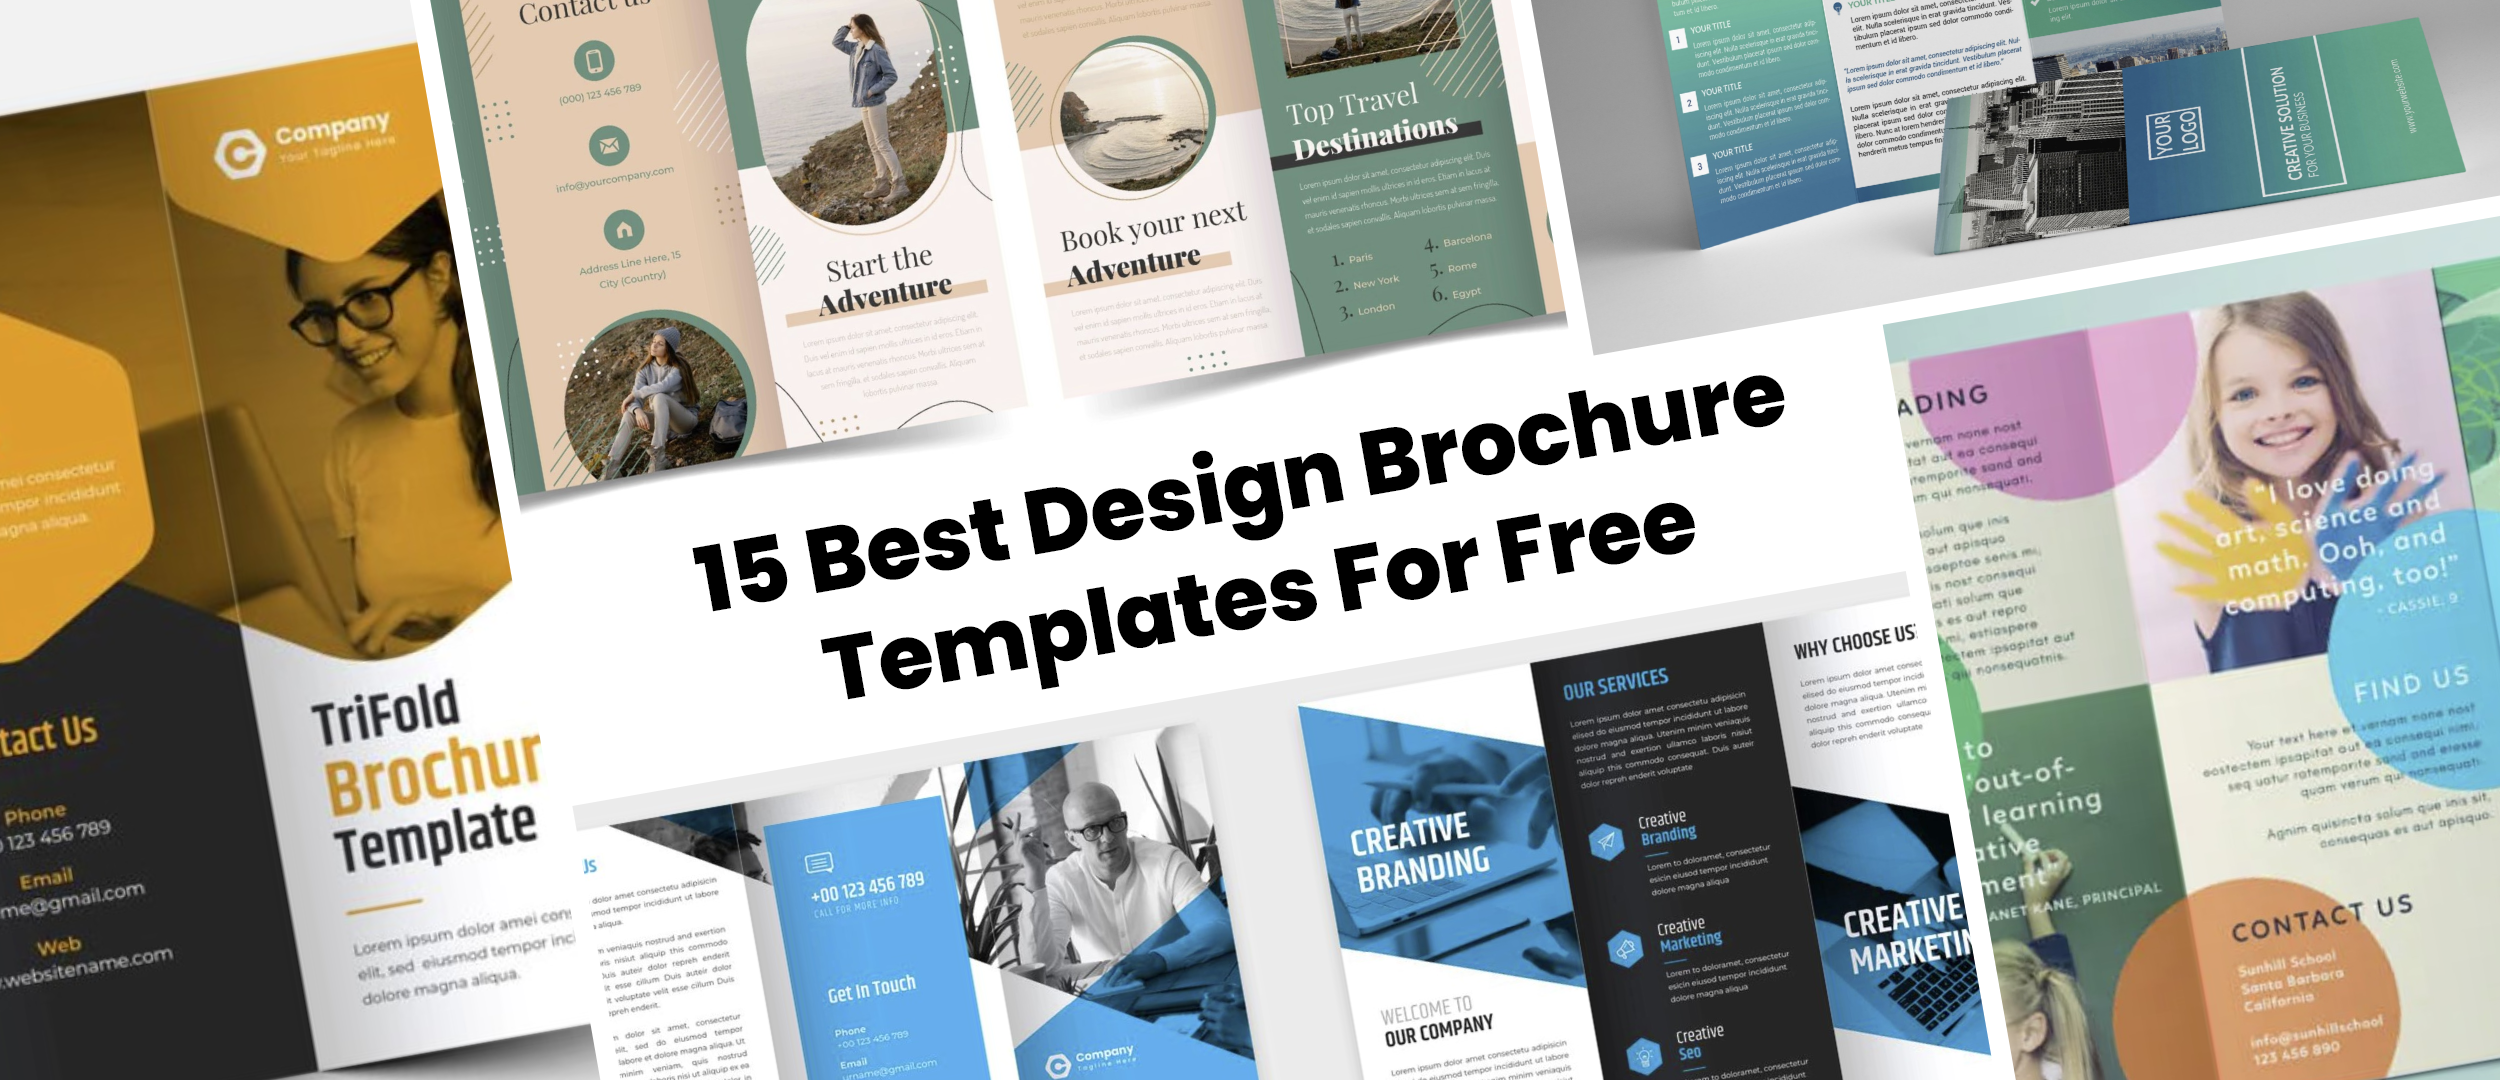 15 Best Brochure Design Templates For Free